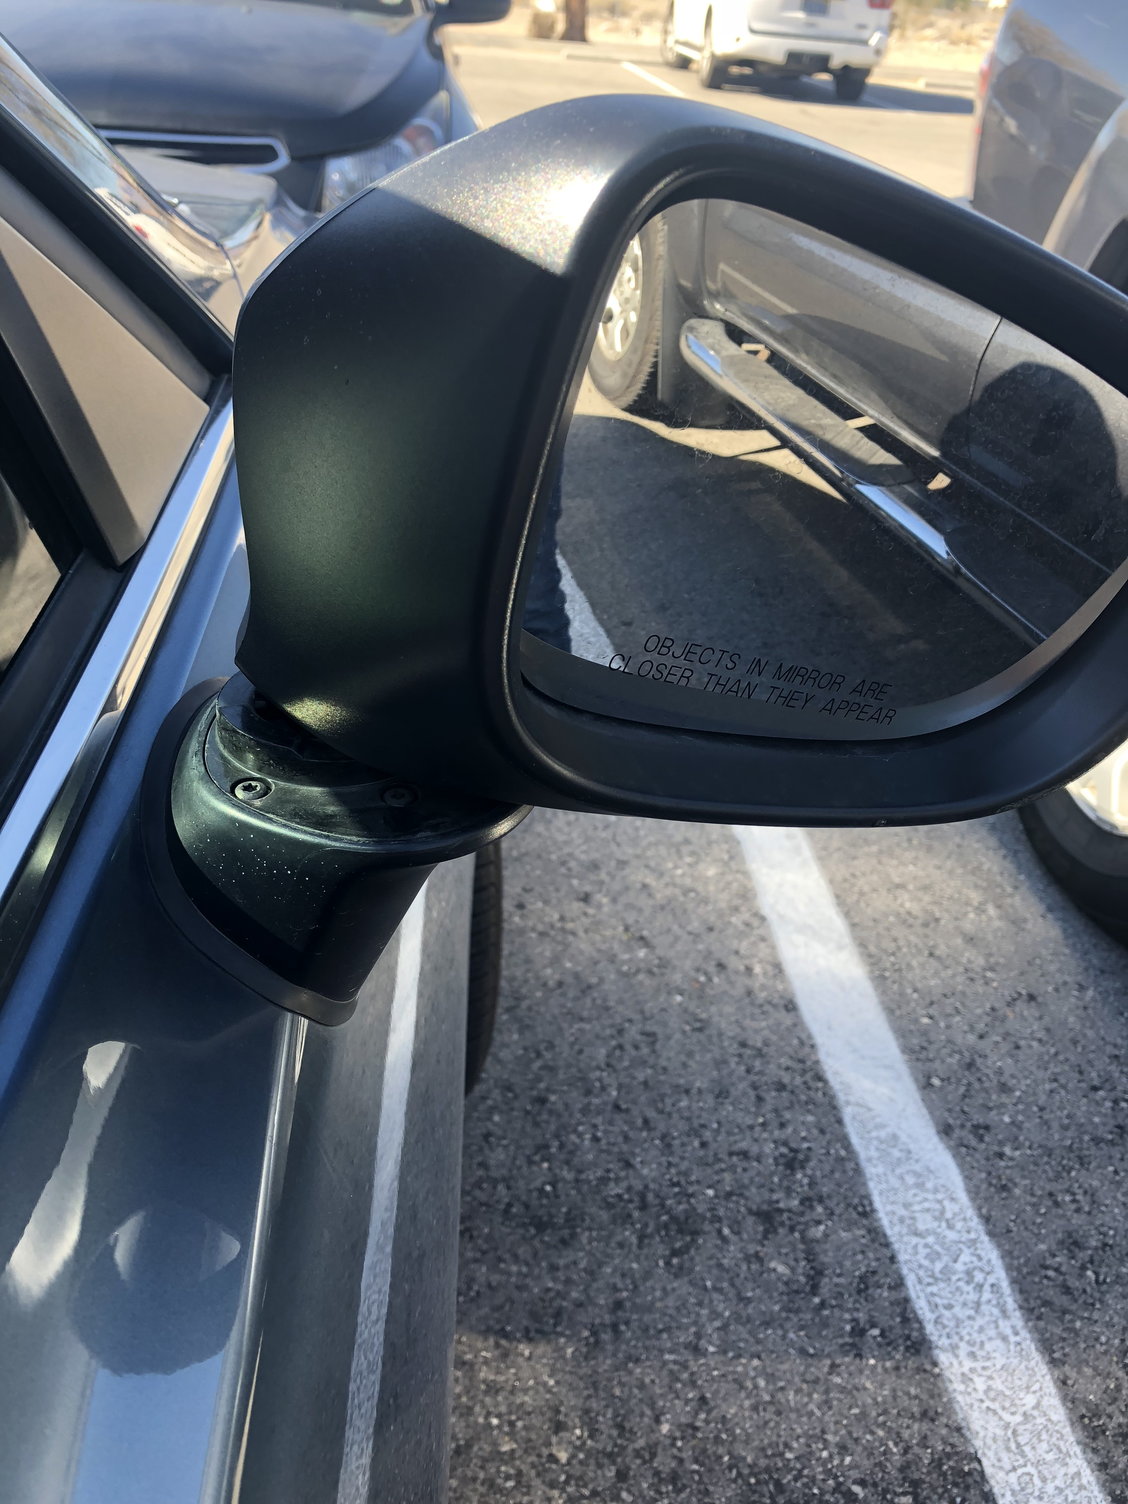 Broken Side Mirror Mazda Forum, Removing Broken Wing Mirror Glass